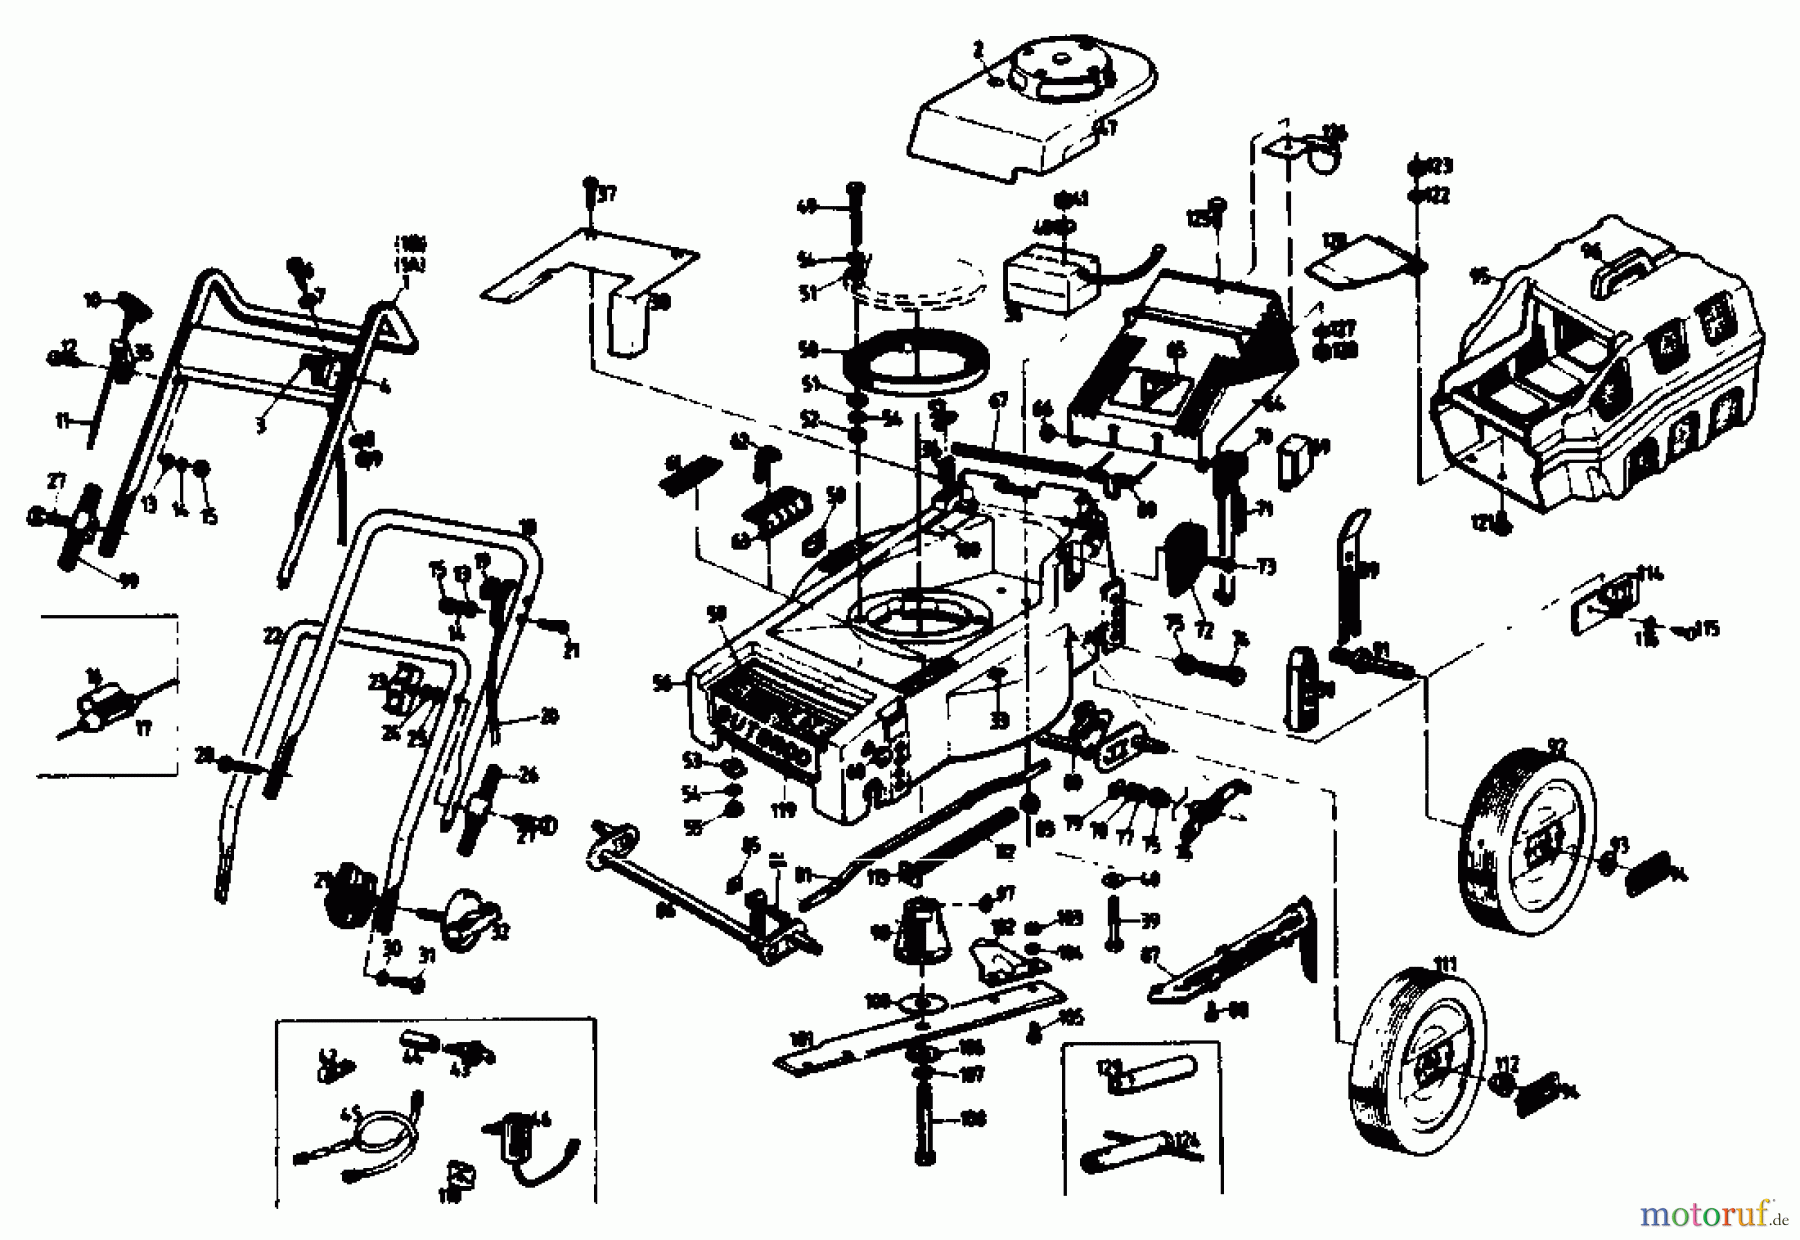  Gutbrod Petrol mower HB 40 BS 02896.04  (1989) Basic machine